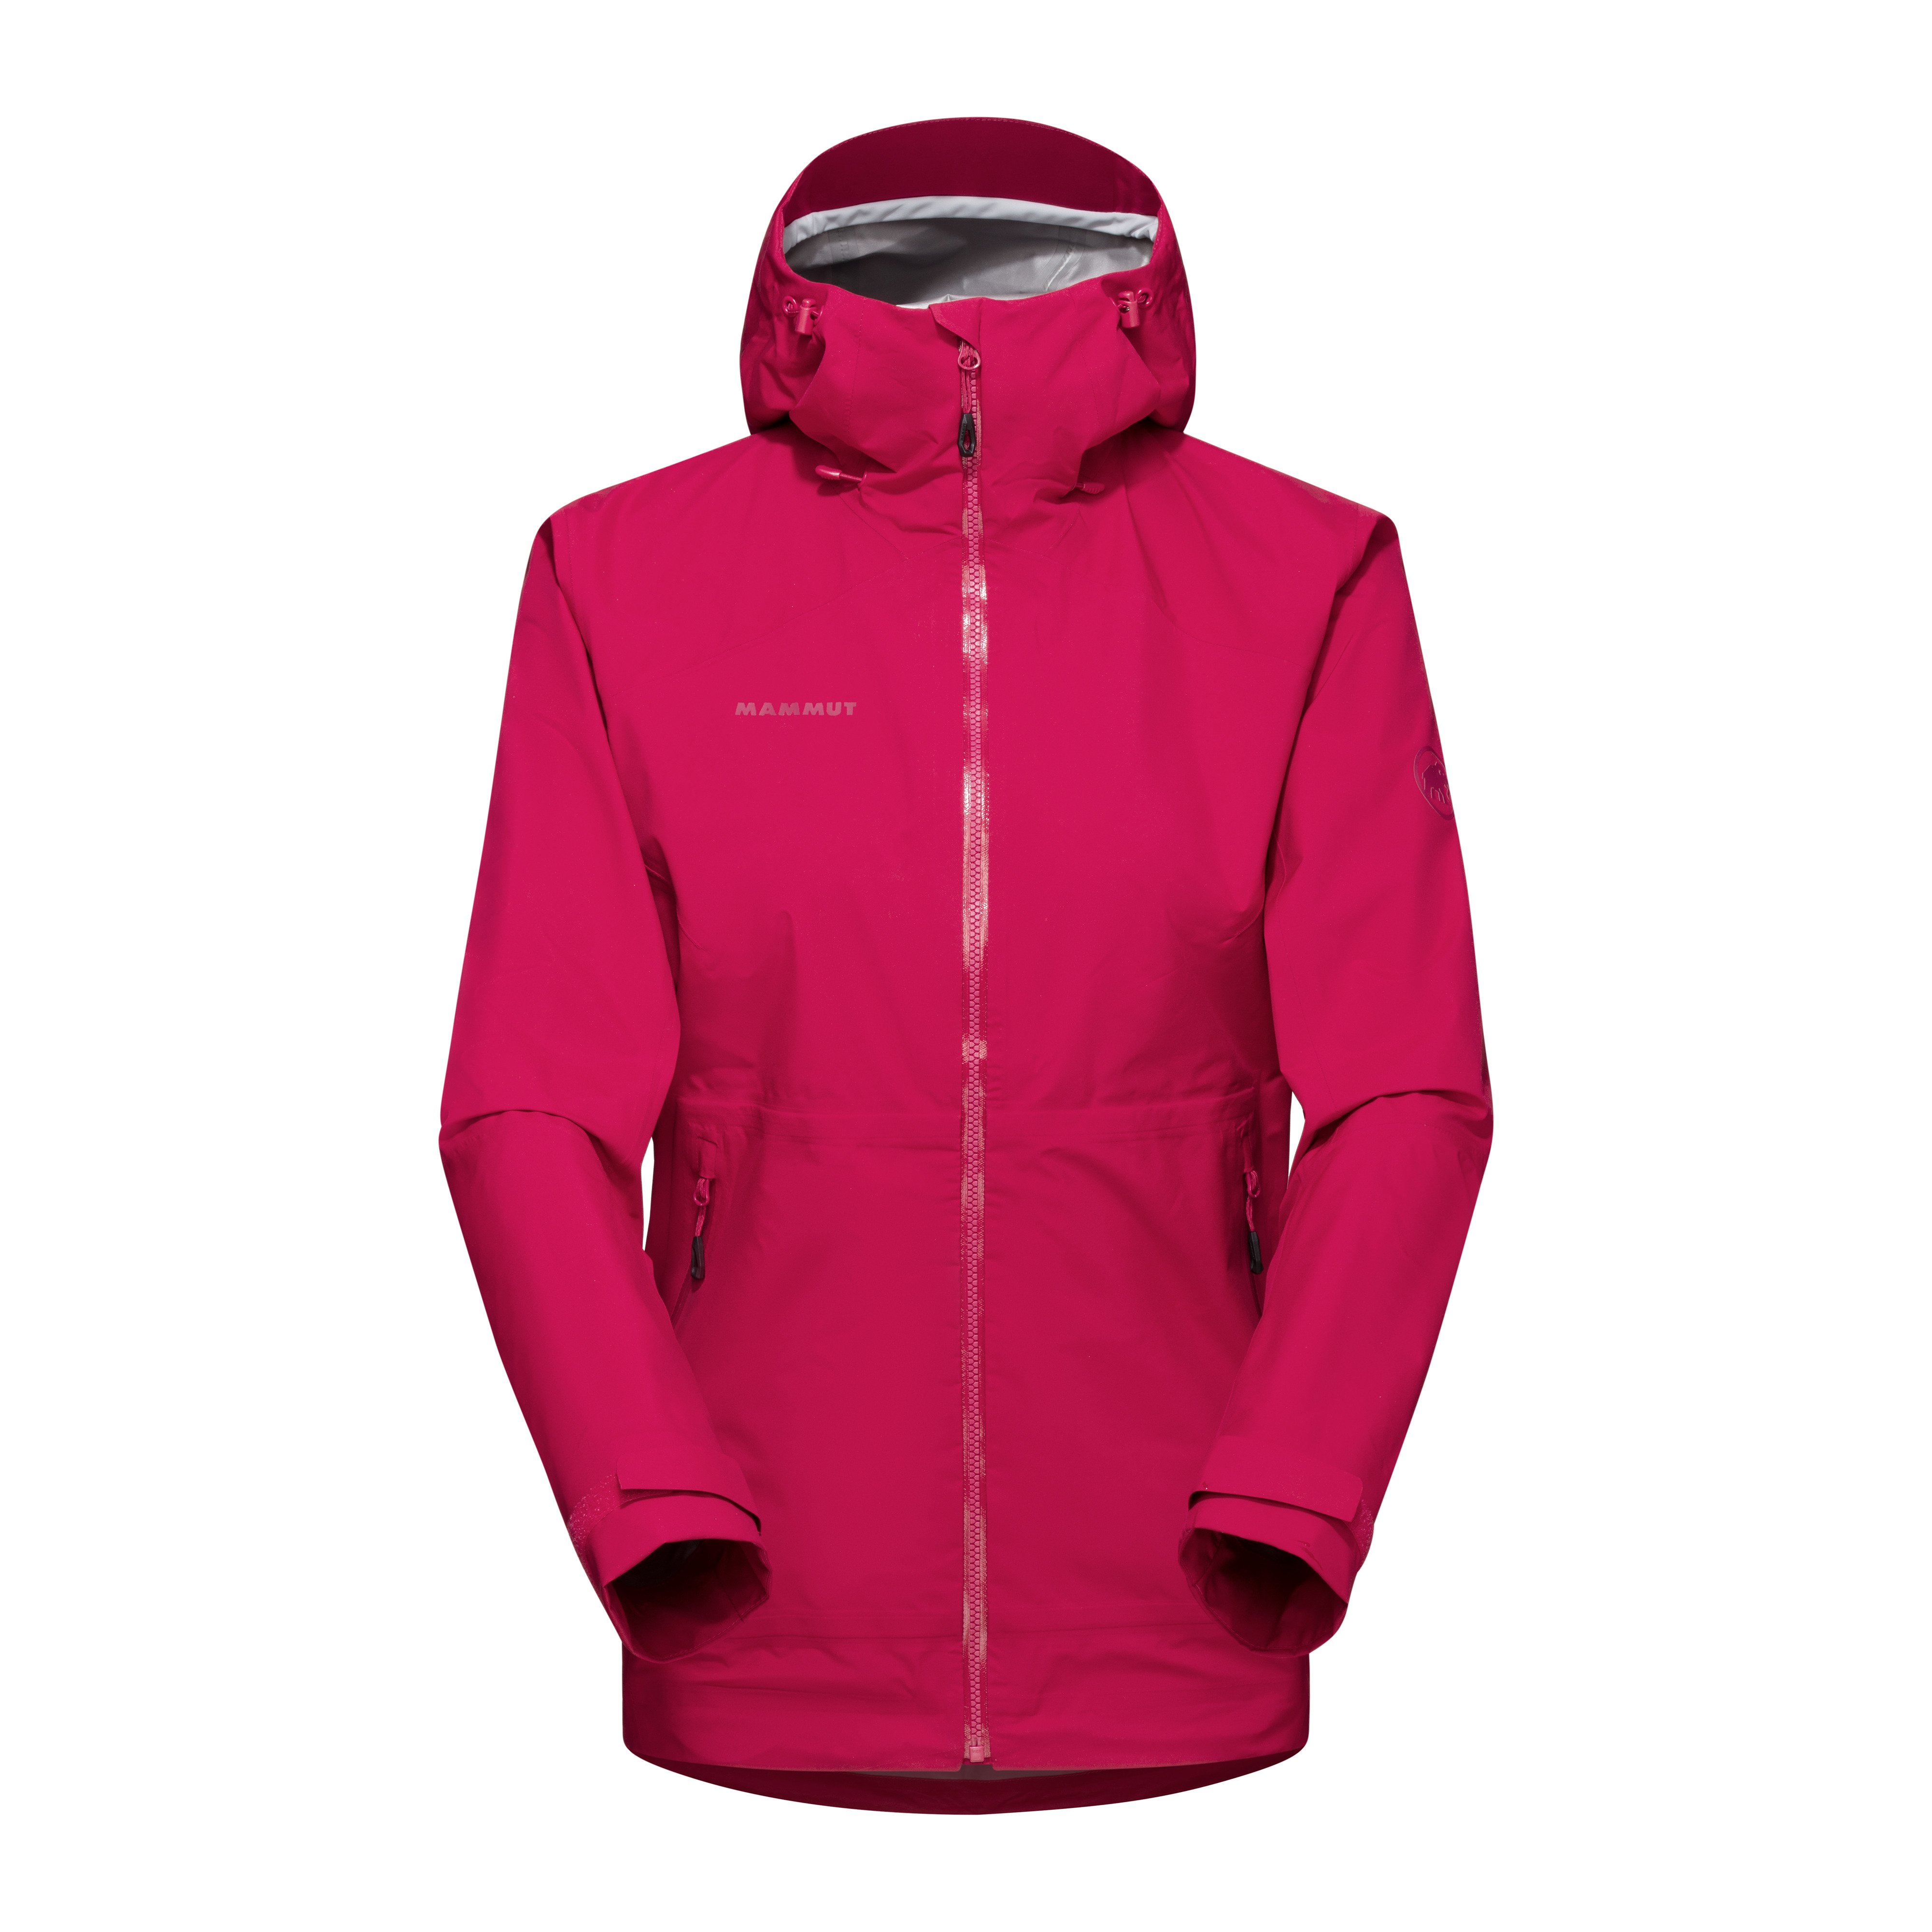 Convey Tour HS Hooded Jacket Women - sundown, XL product image